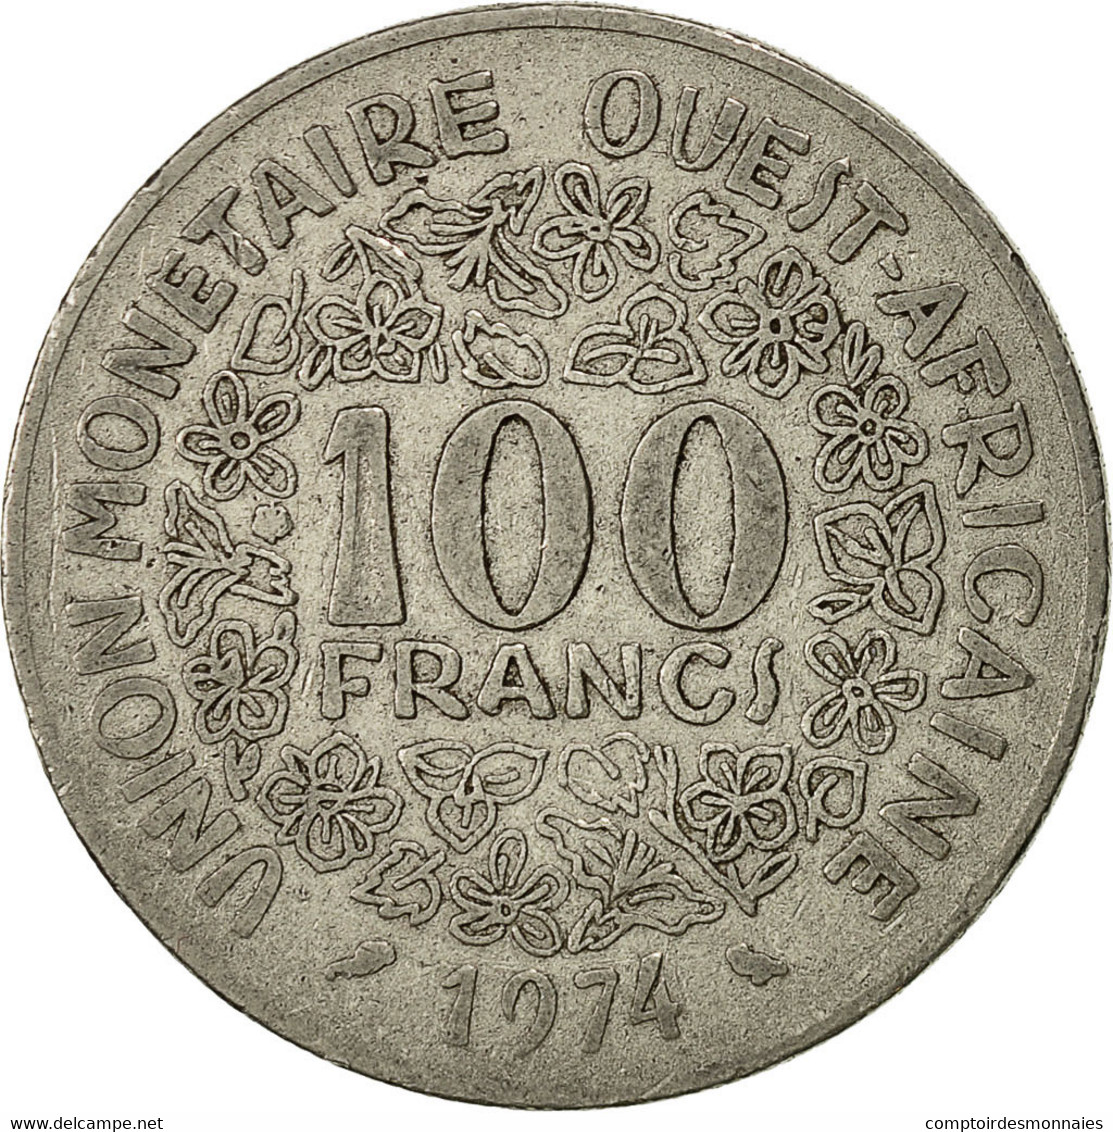 Monnaie, West African States, 100 Francs, 1974, Paris, TB+, Nickel, KM:4 - Costa De Marfil